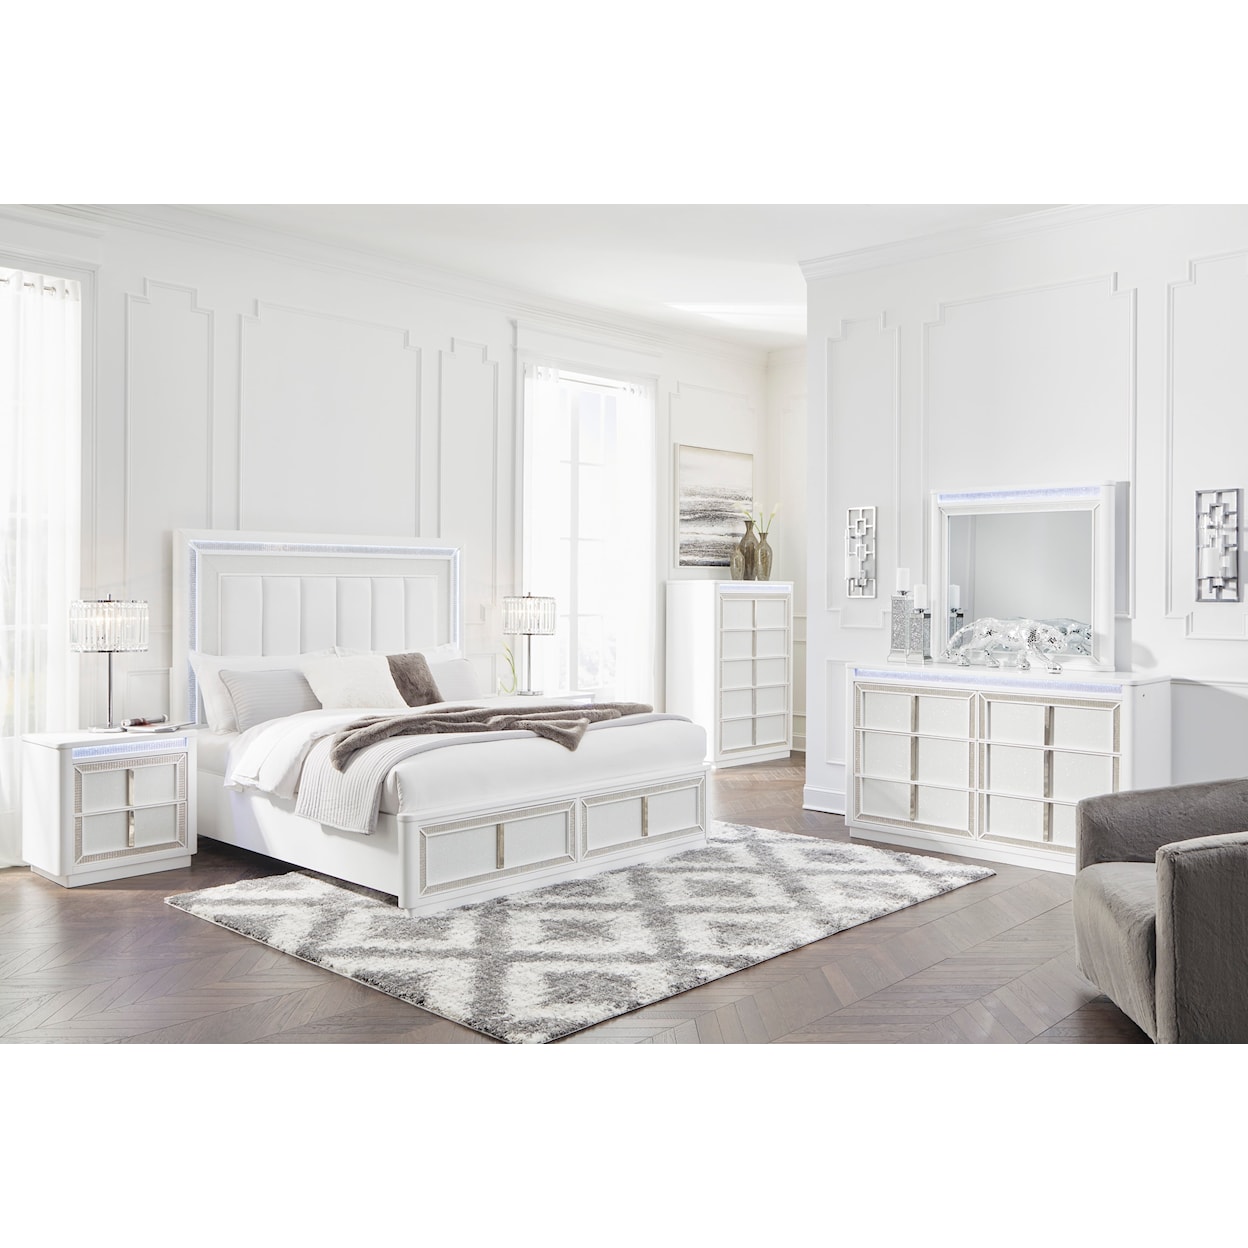 Ashley Furniture Signature Design Chalanna Queen Bedroom Set